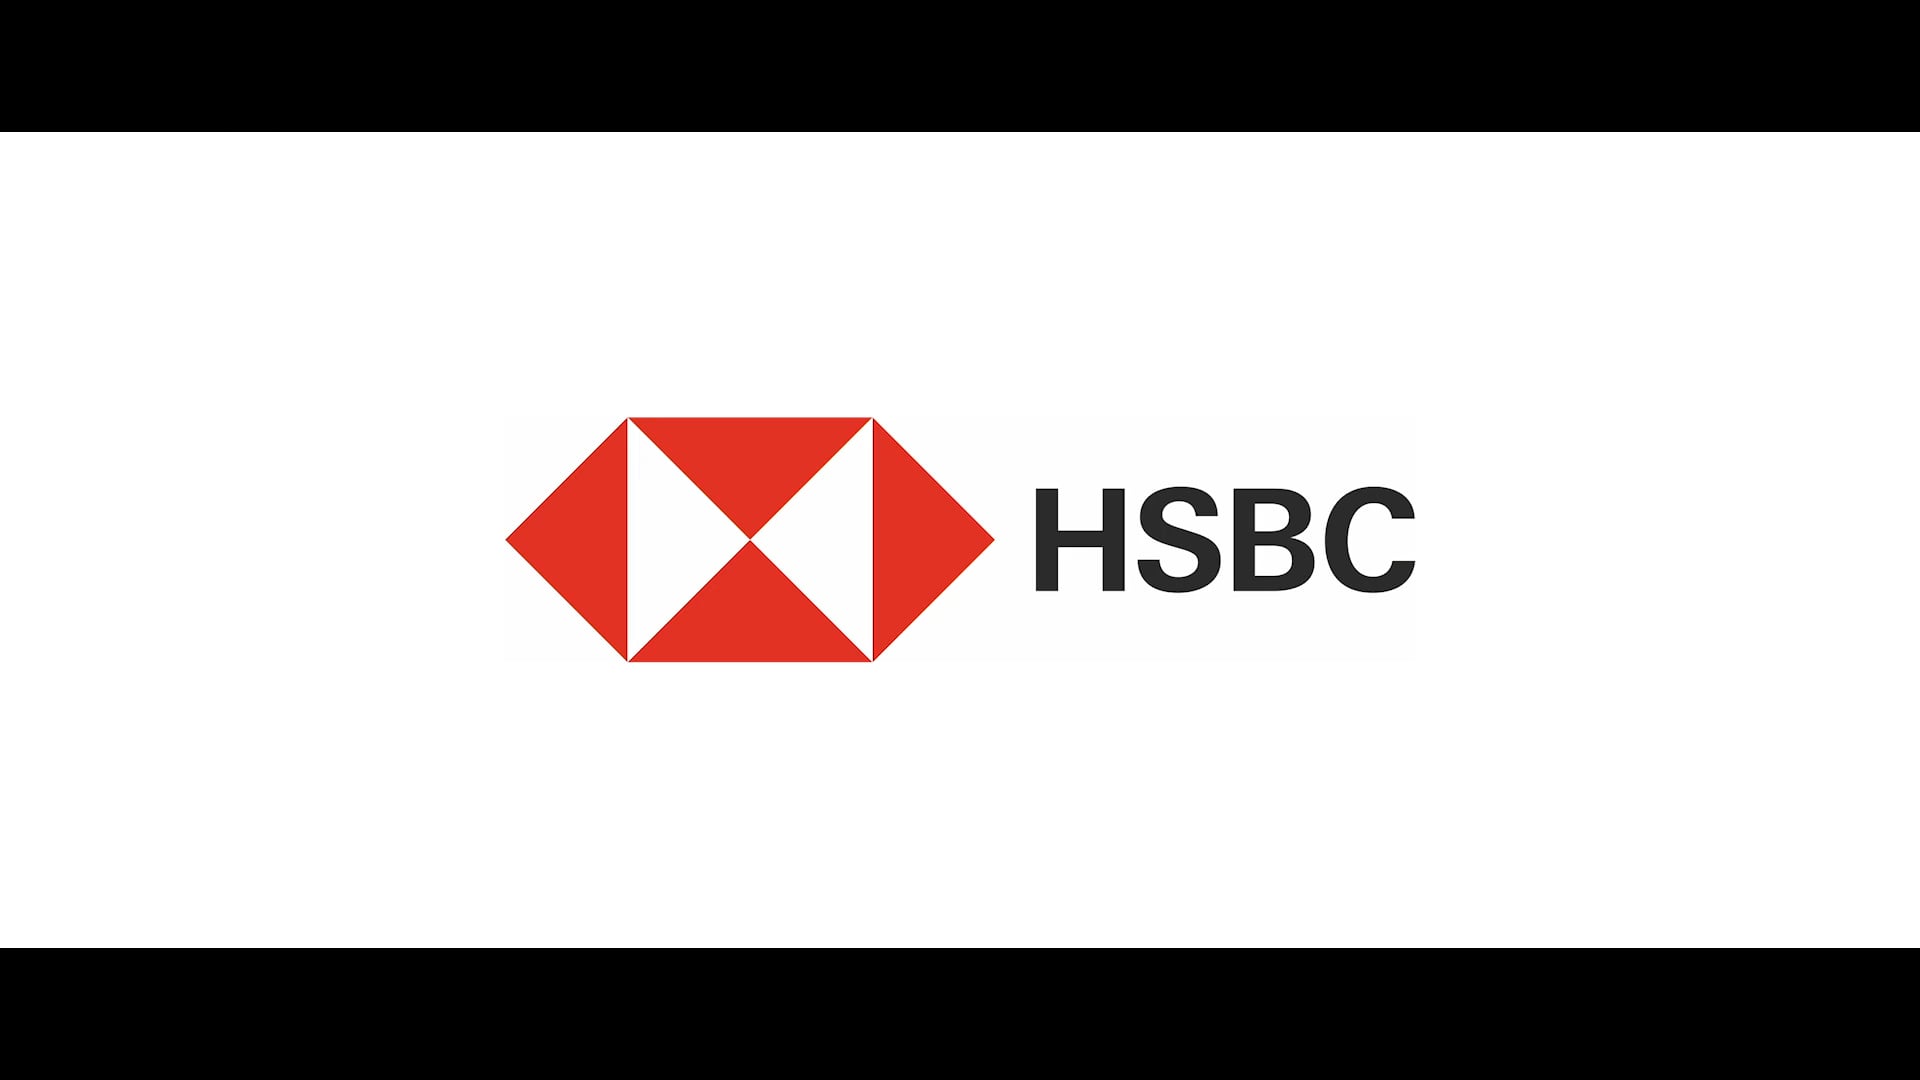 HSBC - 'Be Inspired' Brand Film